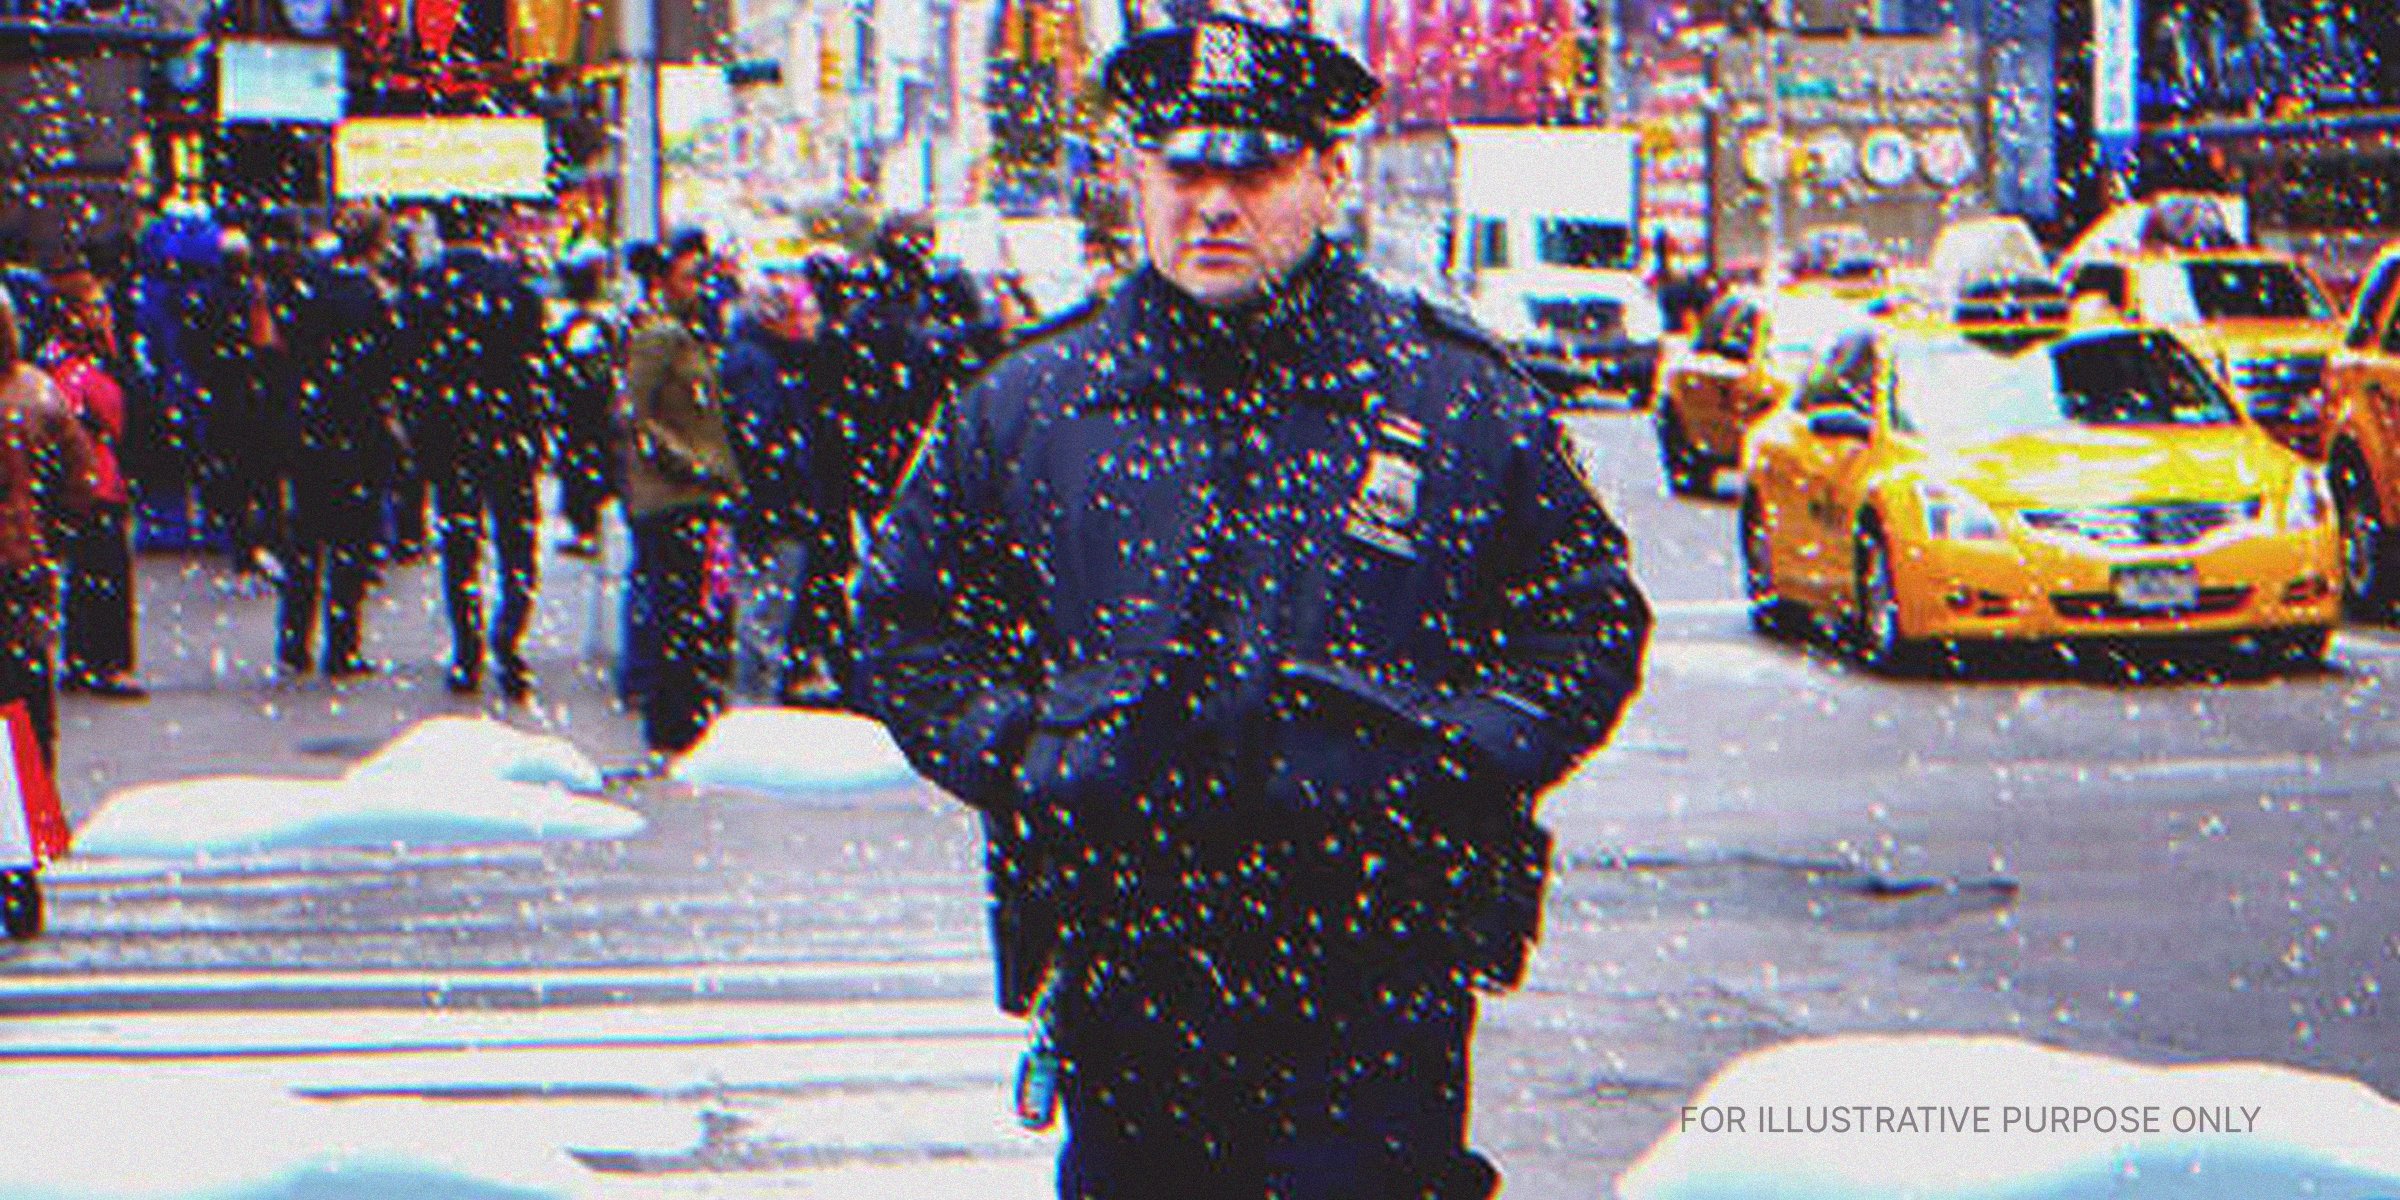 Cop Standing On A Snowy Street. | Source: Shutterstock